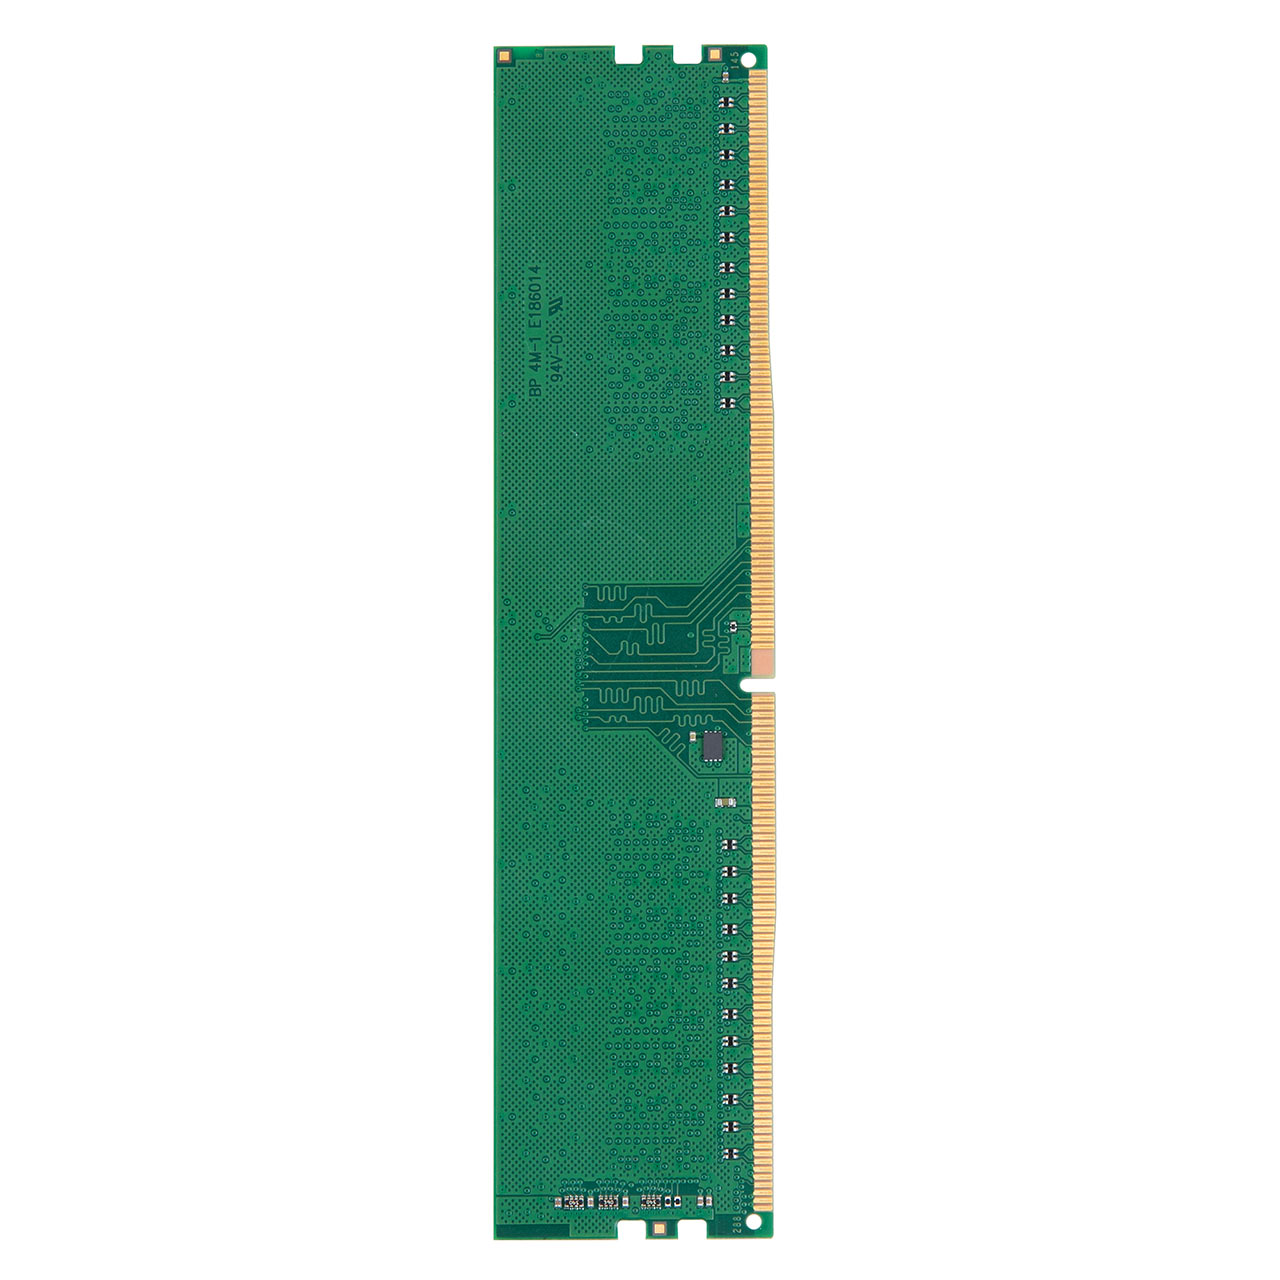 Transcend fXNgbvp 4GB DDR4-2400 PC4-19200 U-DIMM JM2400HLH-4G JM2400HLH-4G